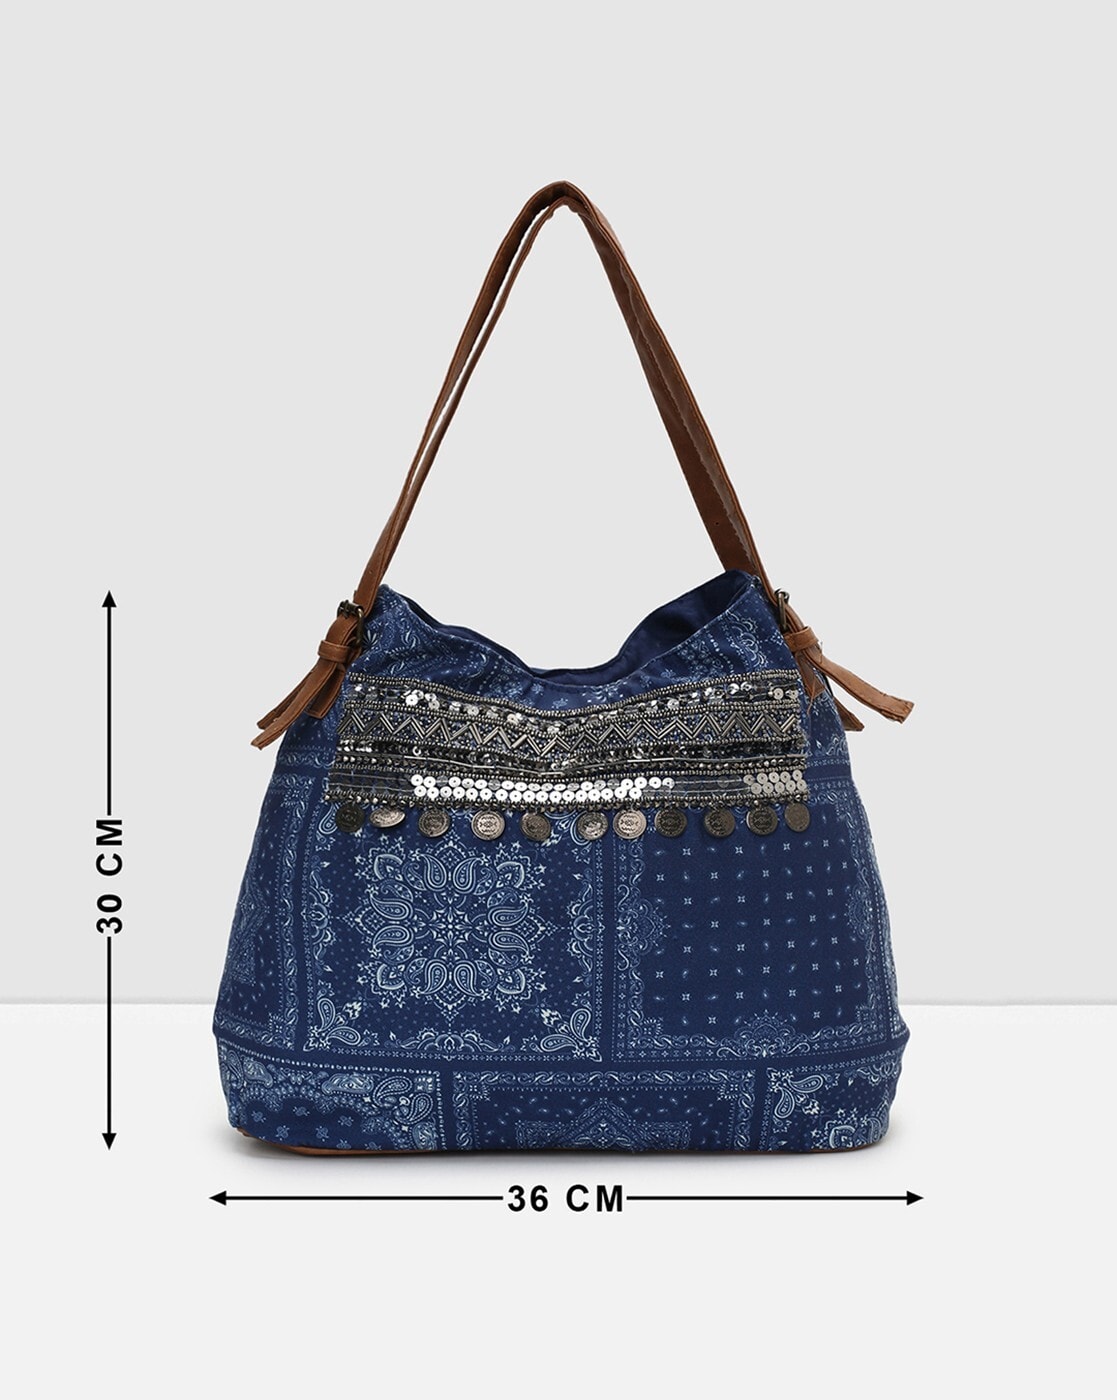 Bag Mili Duo MD2 - metallic blue  BAGS \ shopper bags PROMOCJE